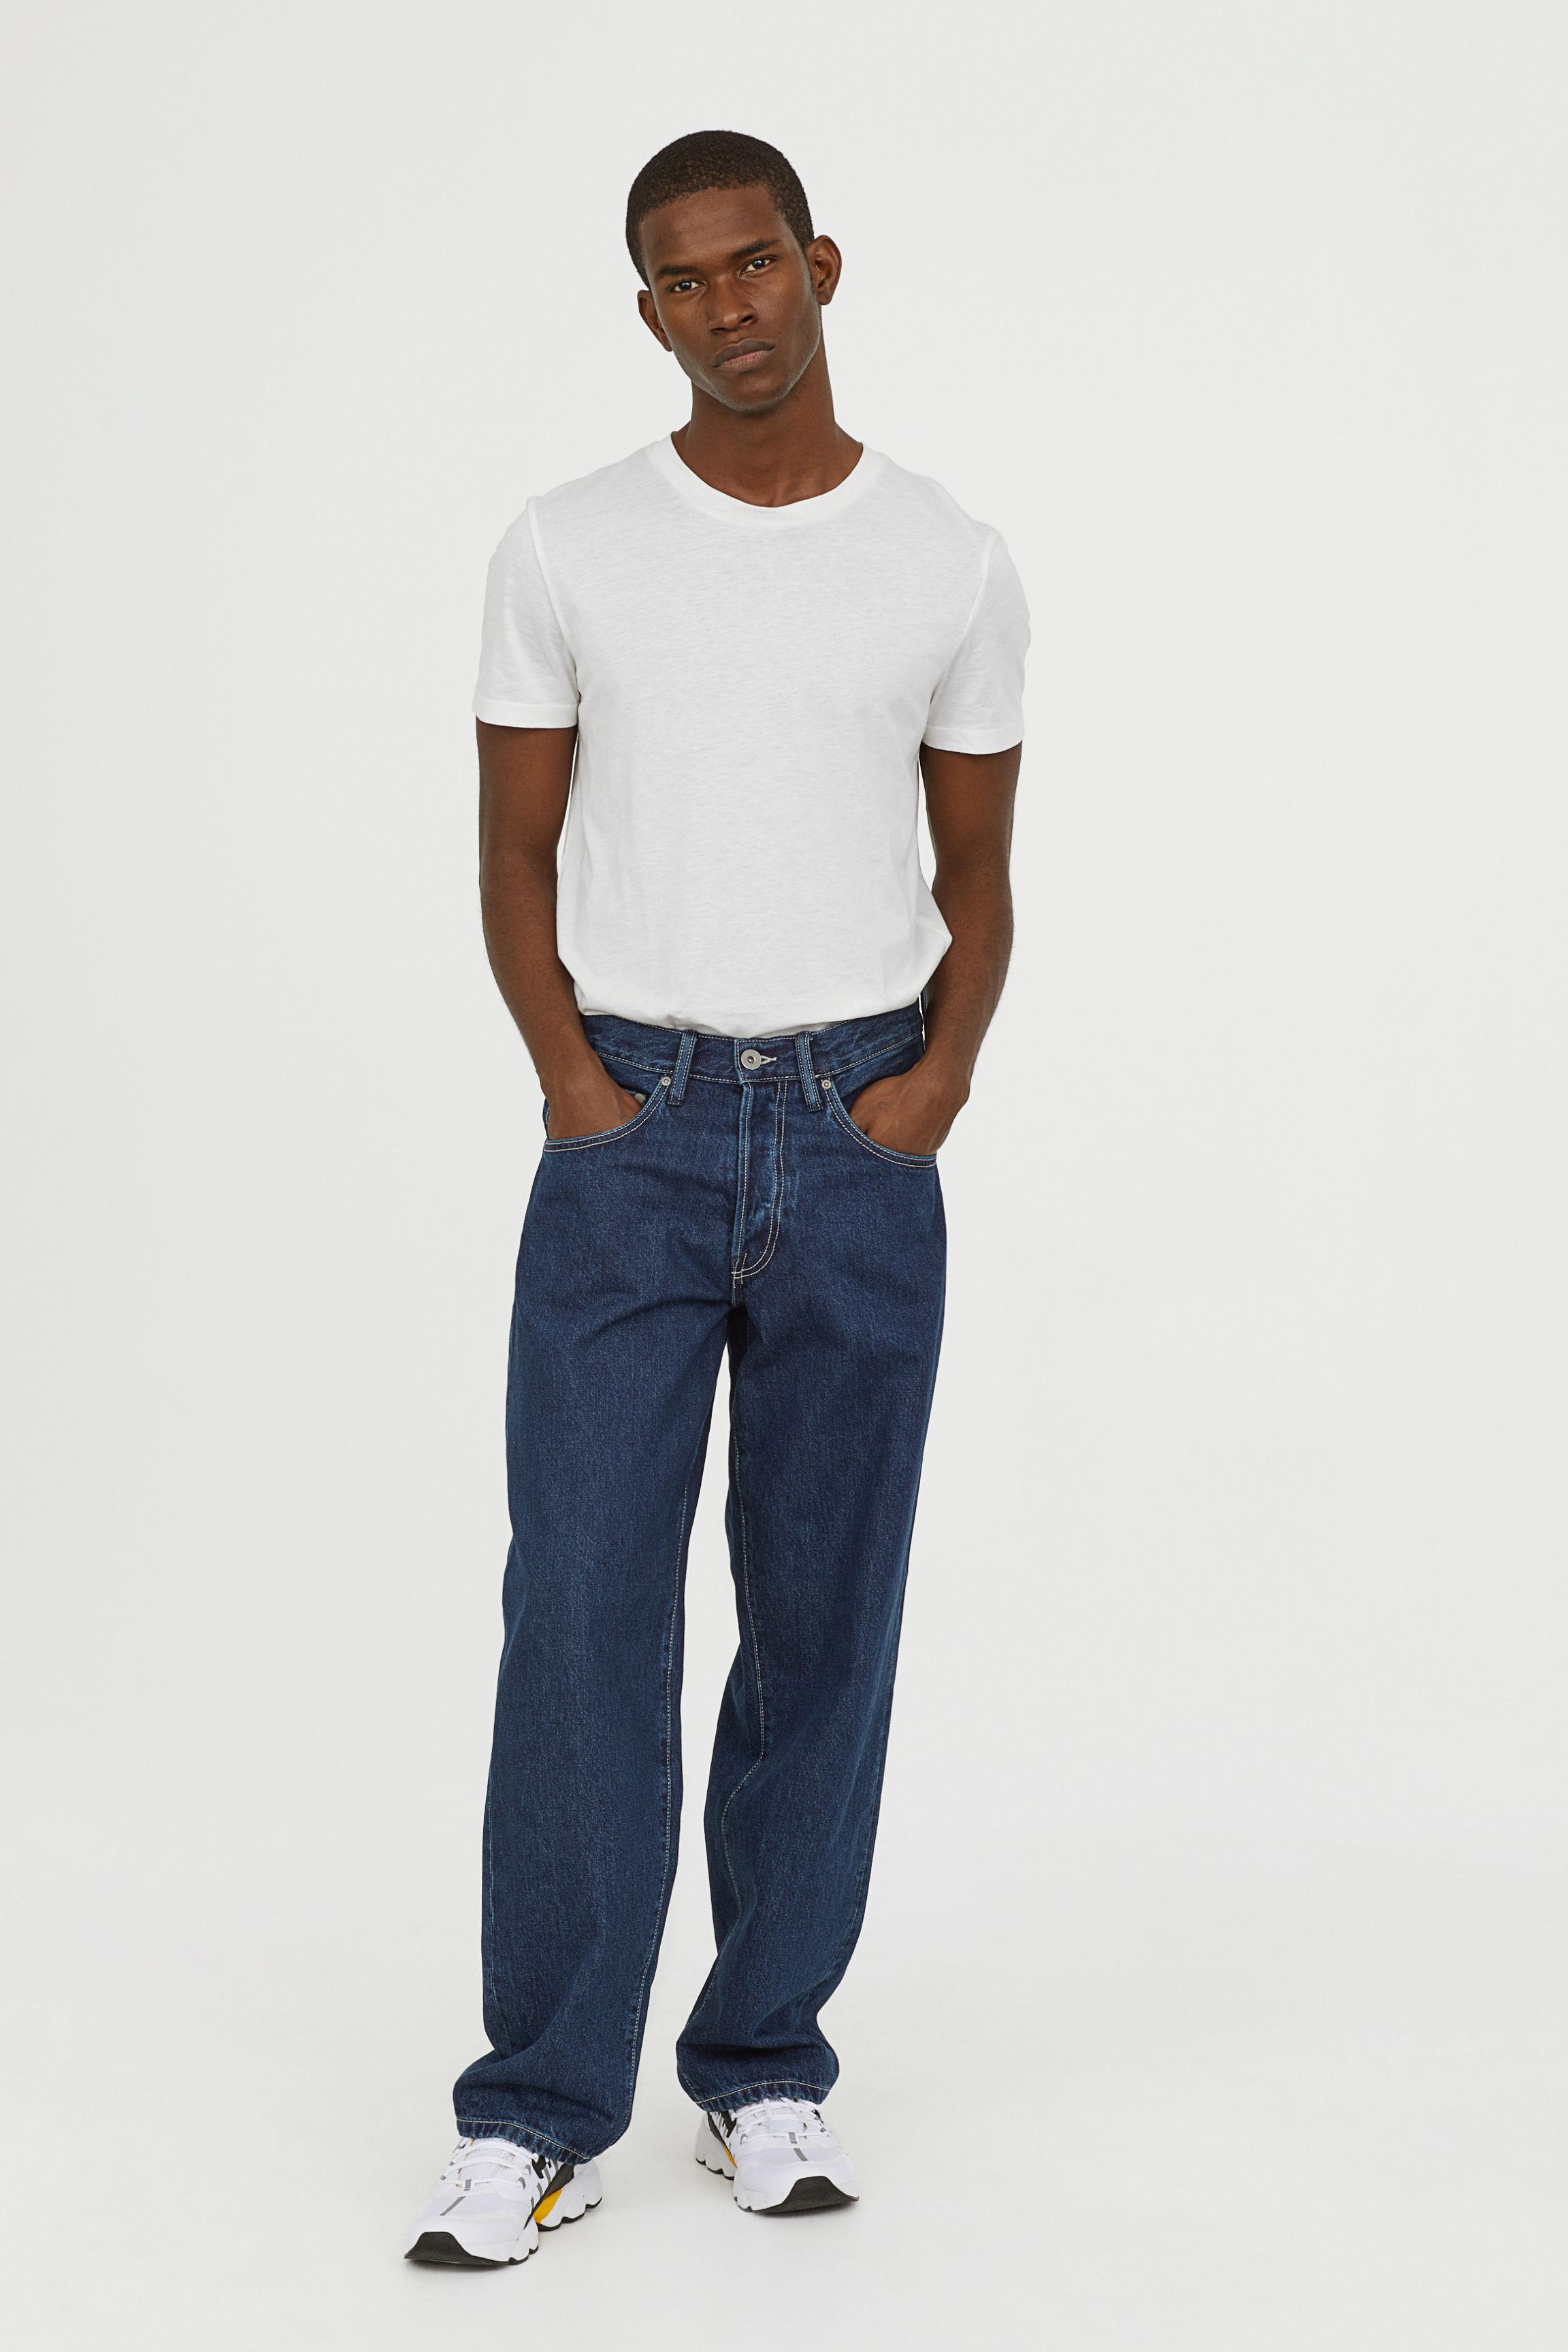 H&M Denim Baggy Jeans in Dark Denim Blue (Blue) for Men - Lyst